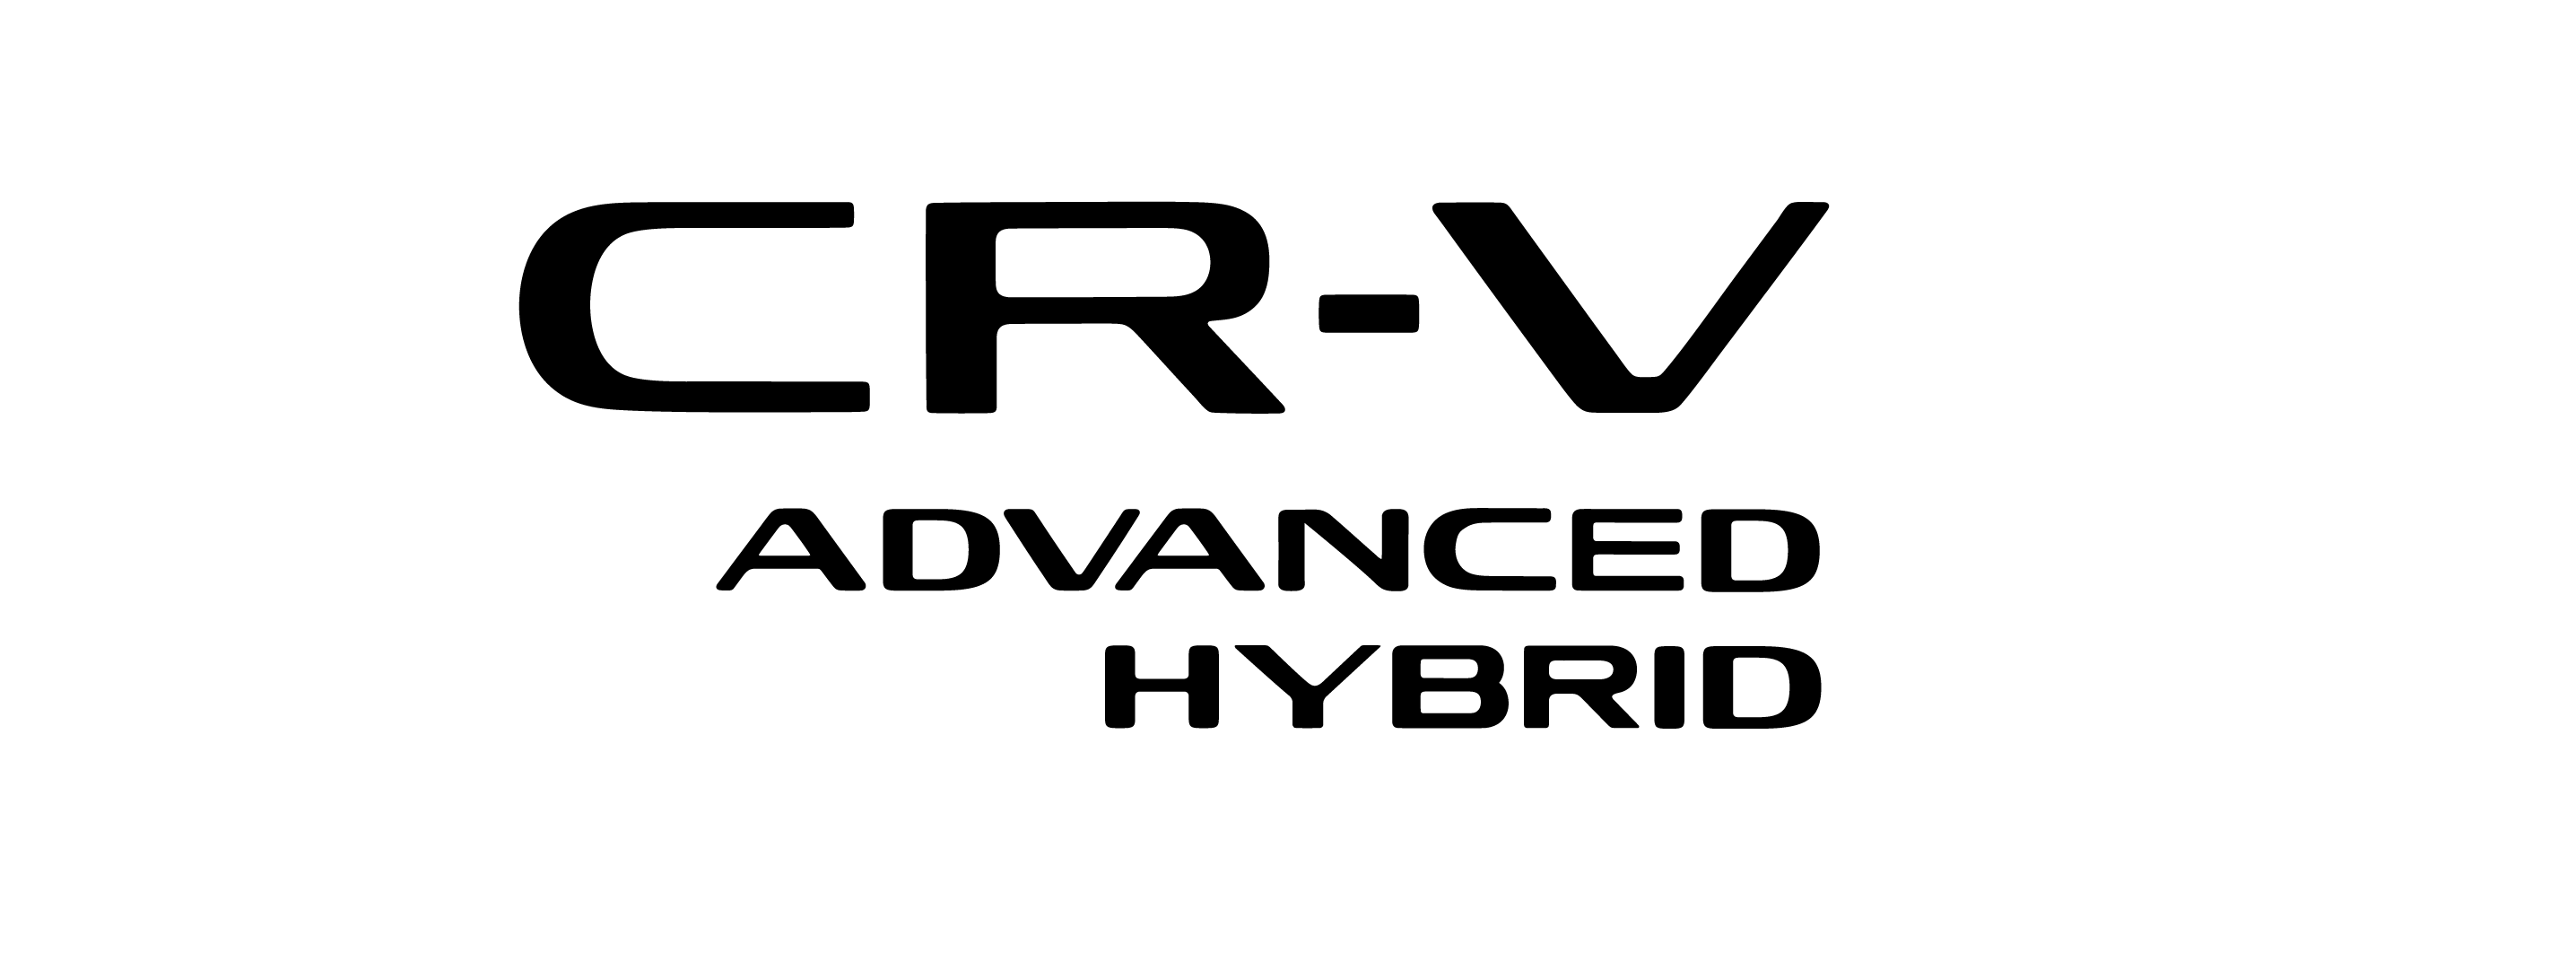 CR-V Advanced Hybrid